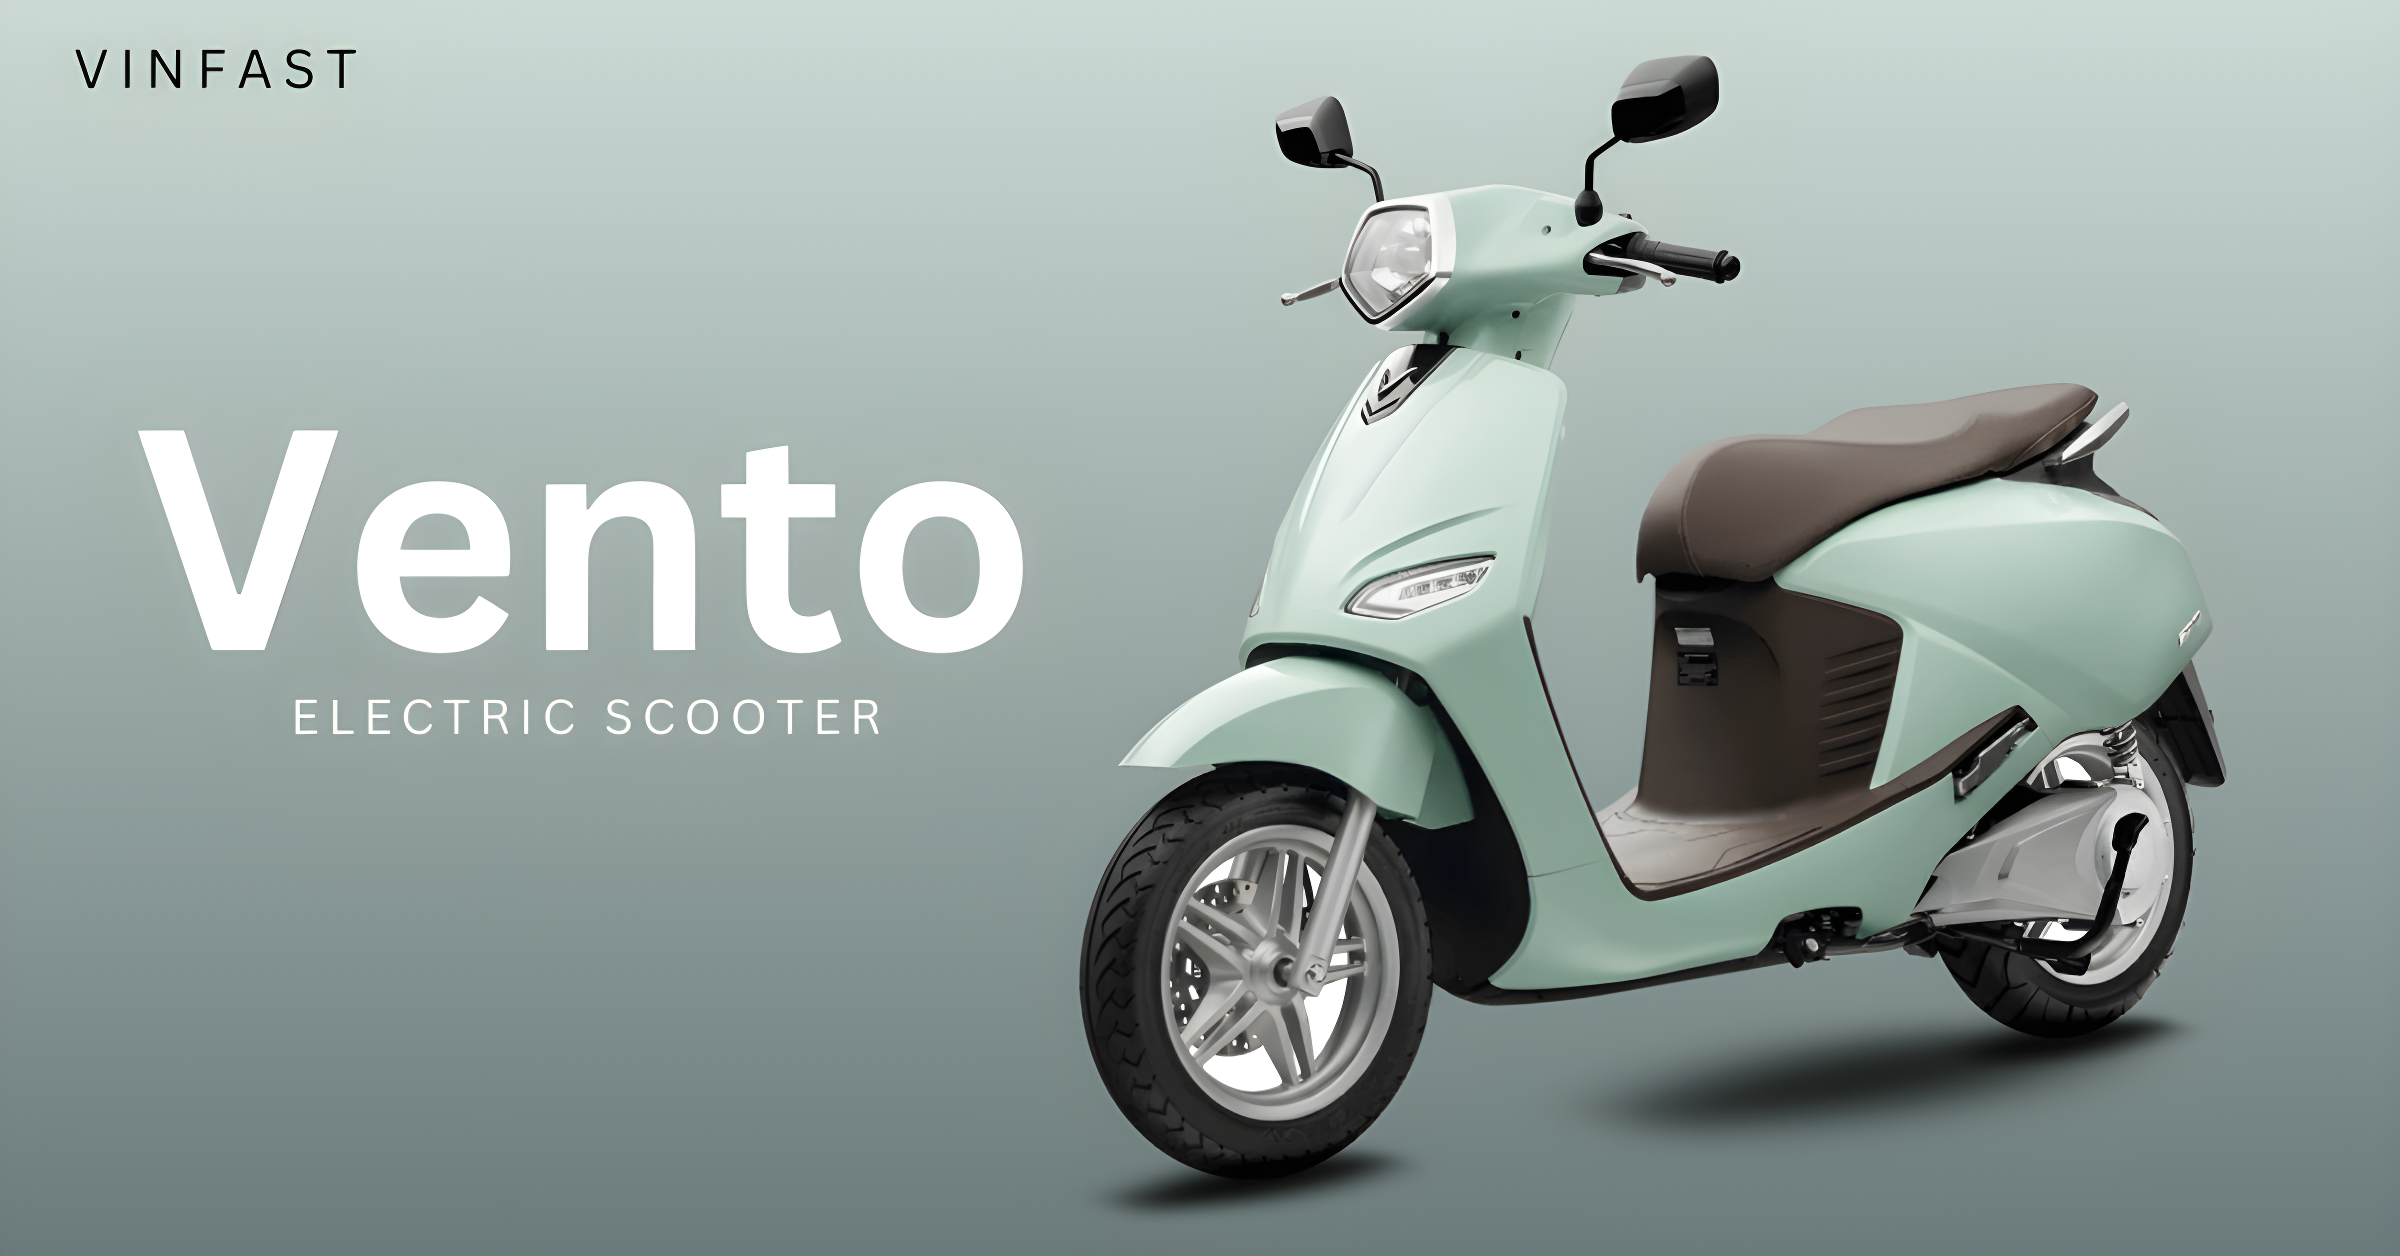 https://e-vehicleinfo.com/global/vinfast-vento-electric-scooter/